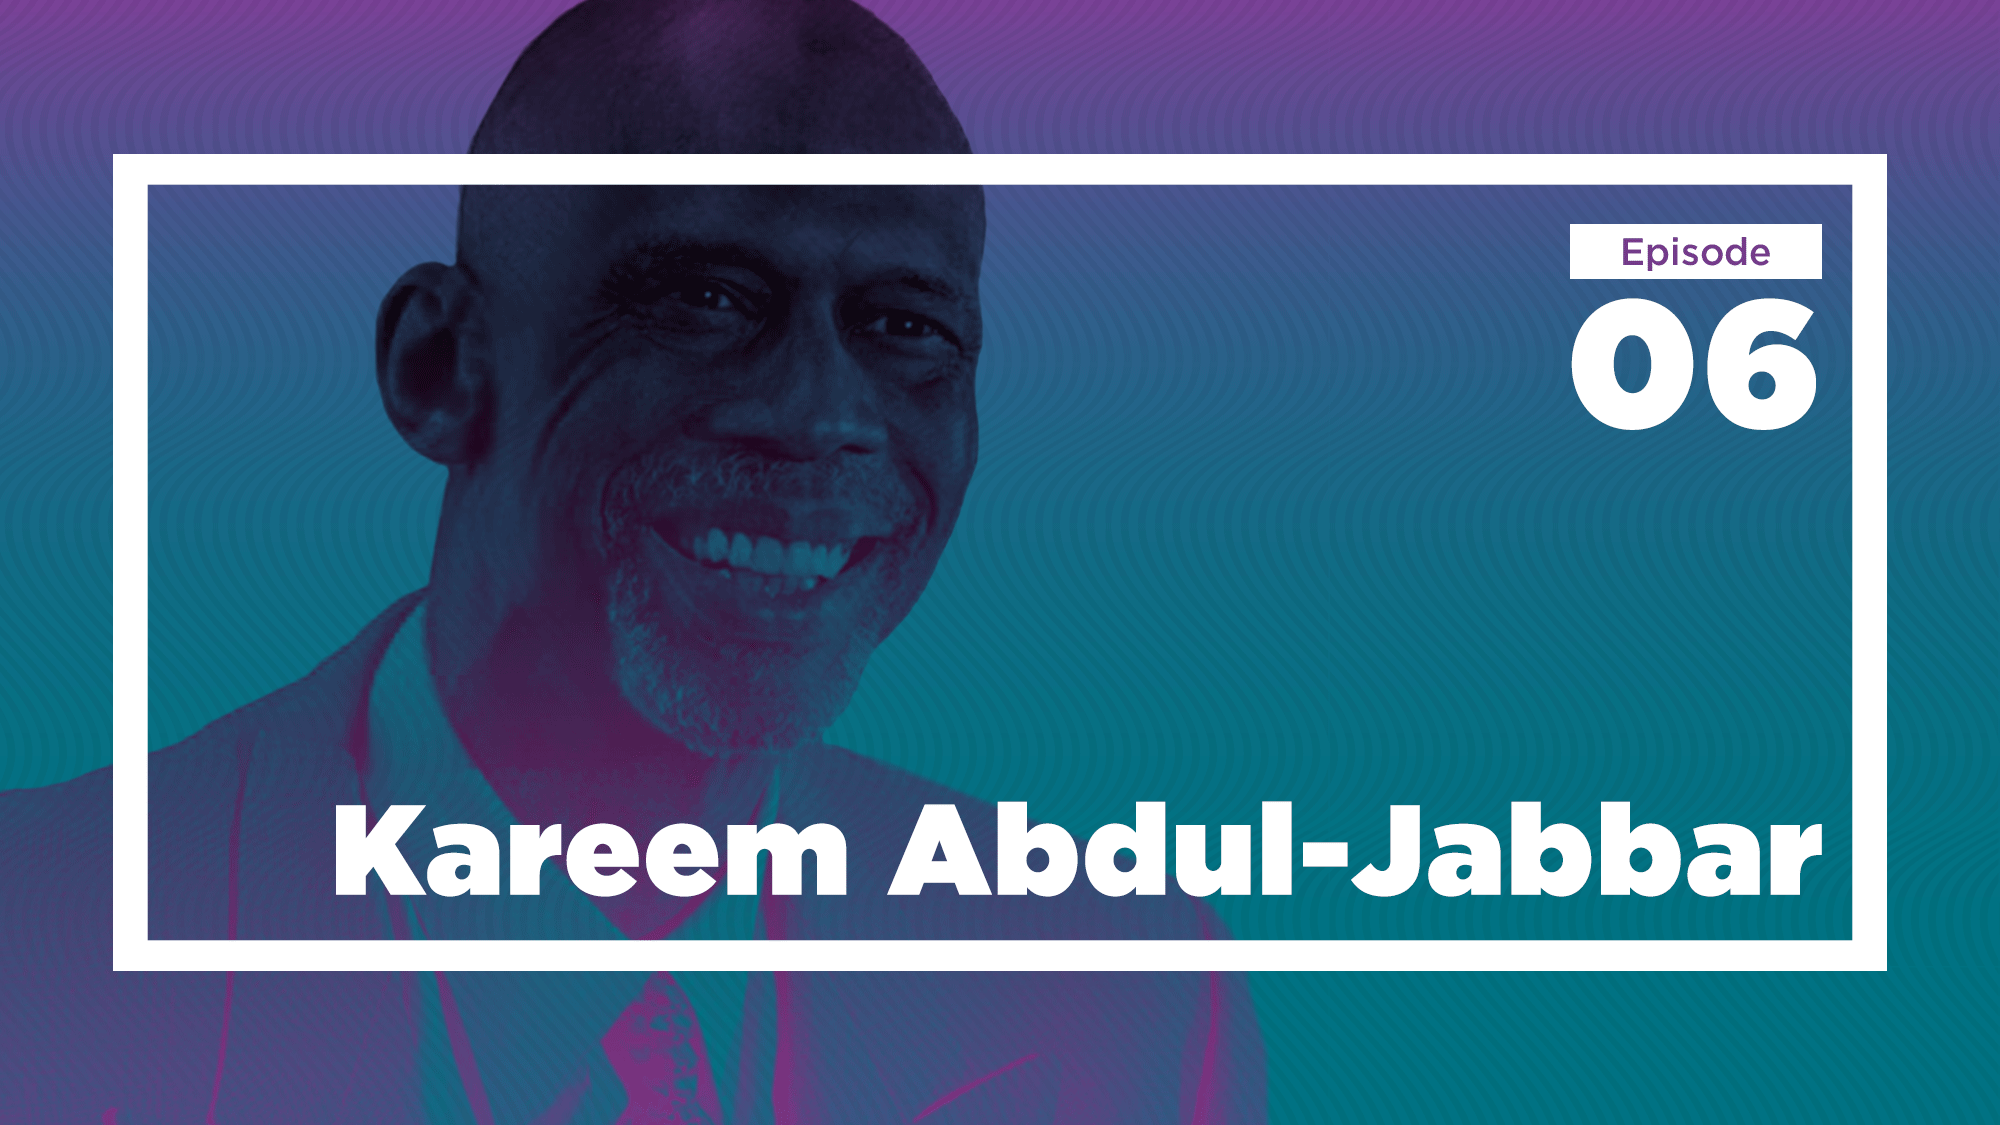 Life's Work: An Interview with Kareem Abdul-Jabbar